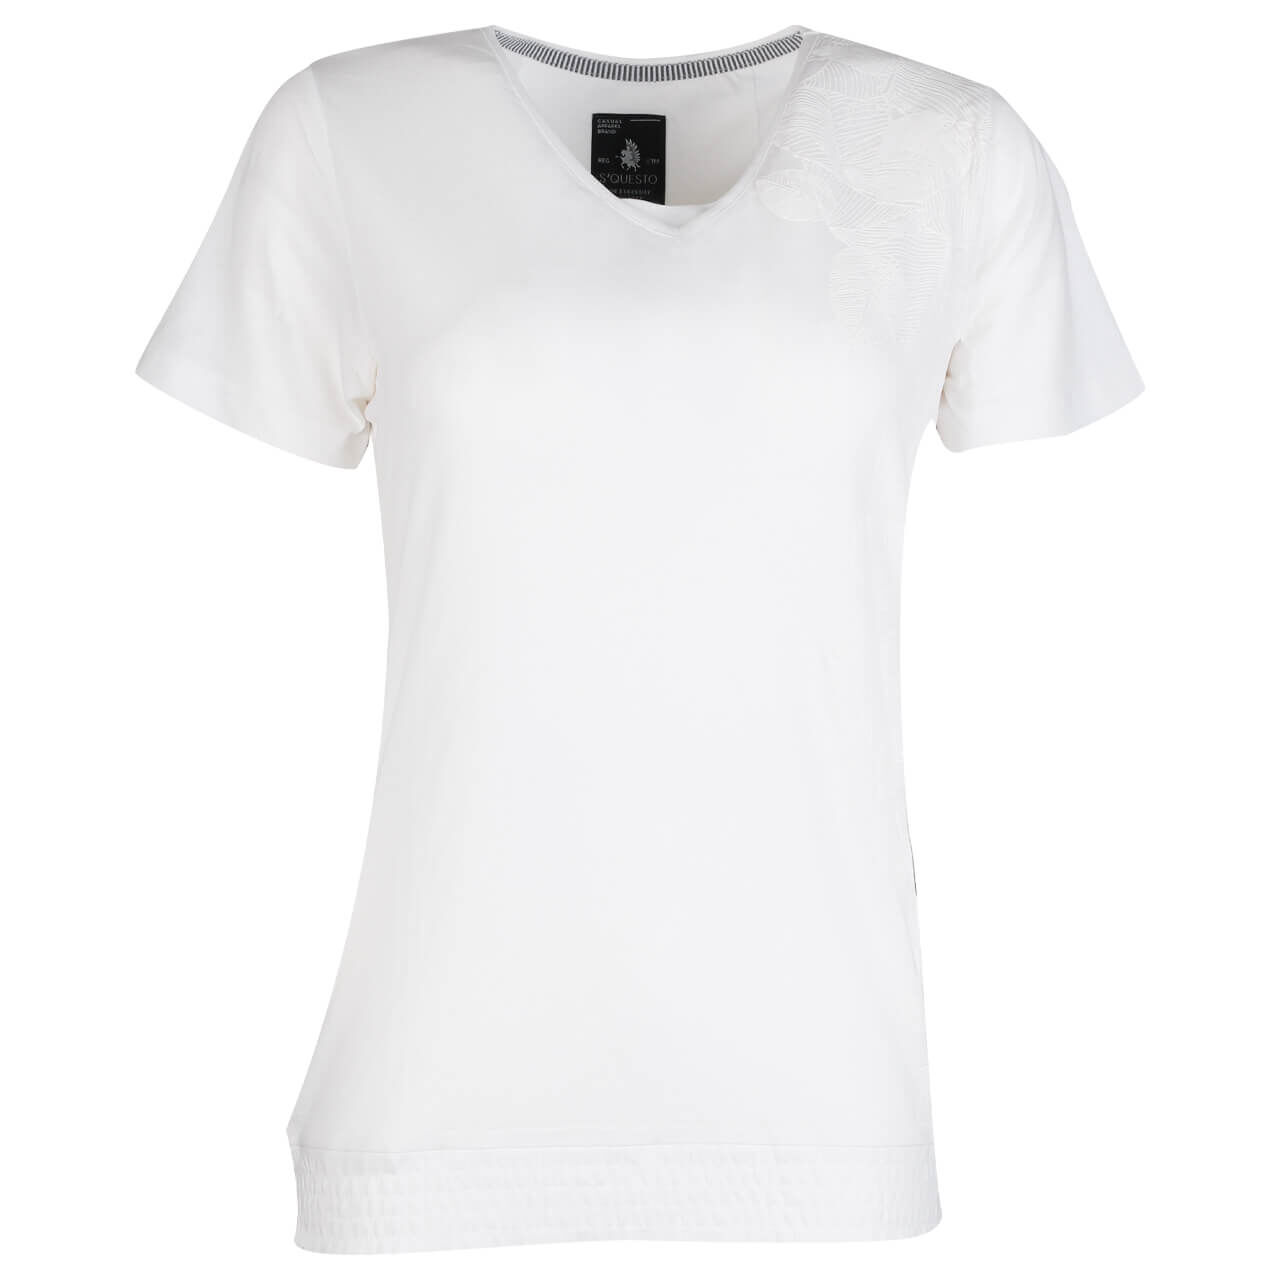 Soquesto Damen T-Shirt white leaf printed